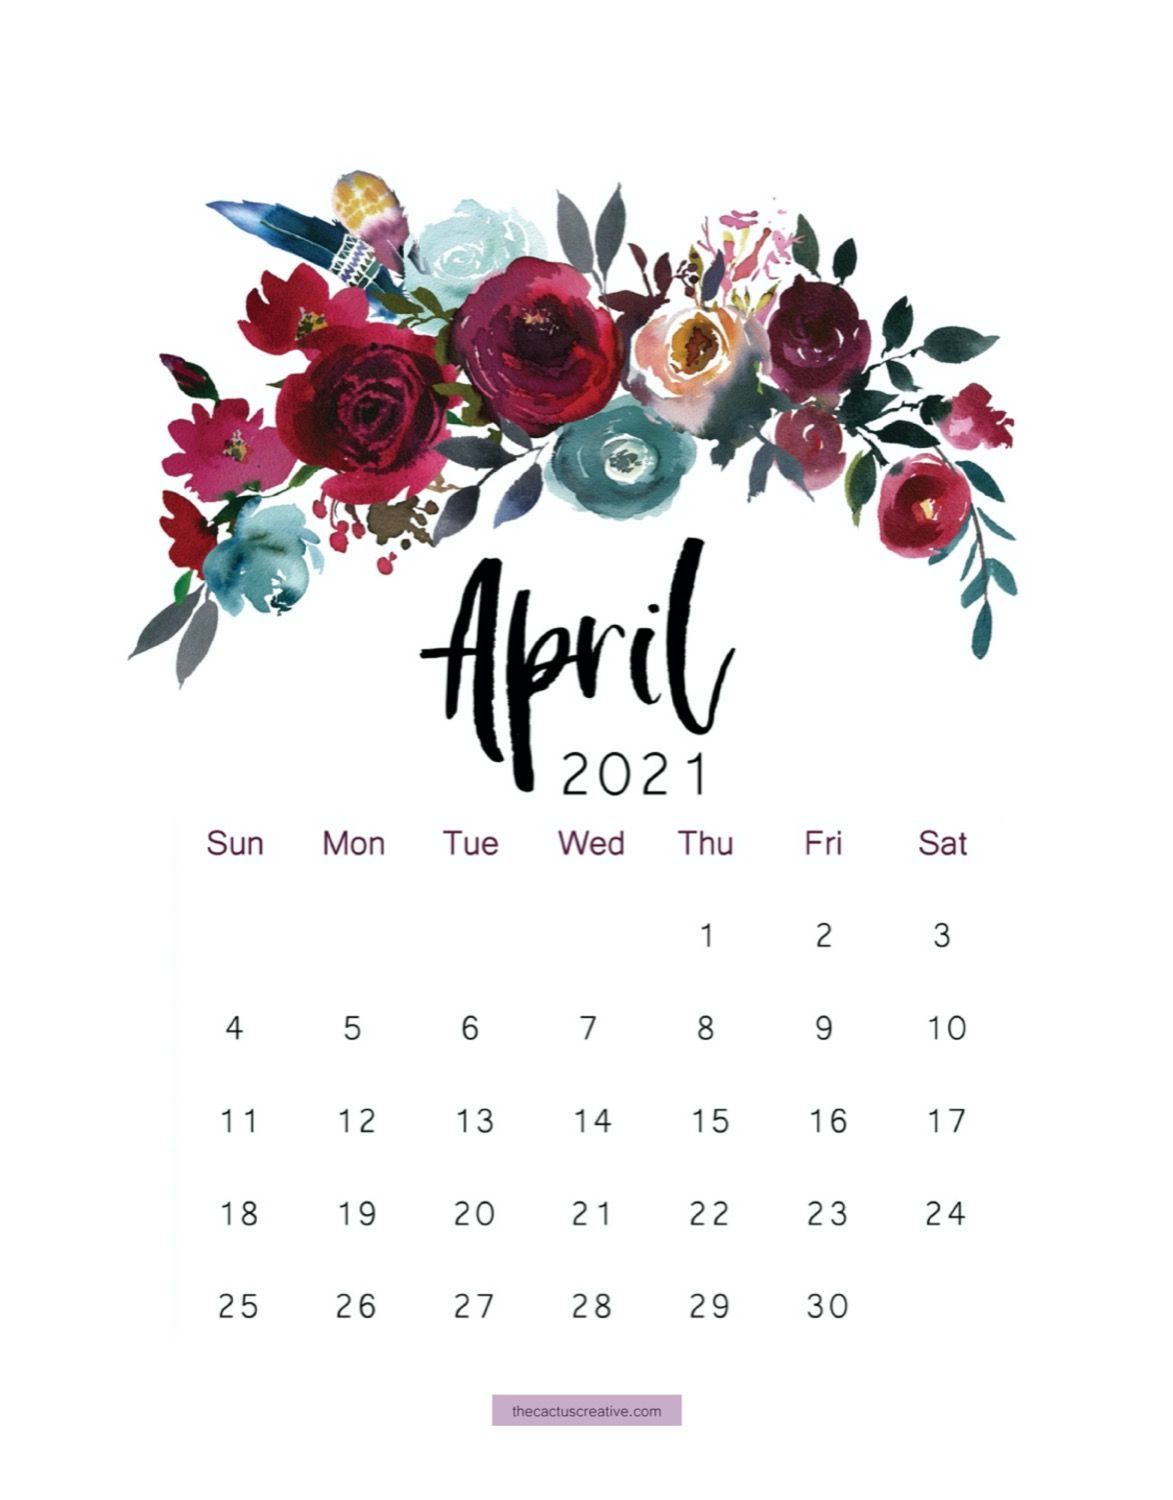 April 2021 Calendar Wallpaper Free April 2021 Calendar Background